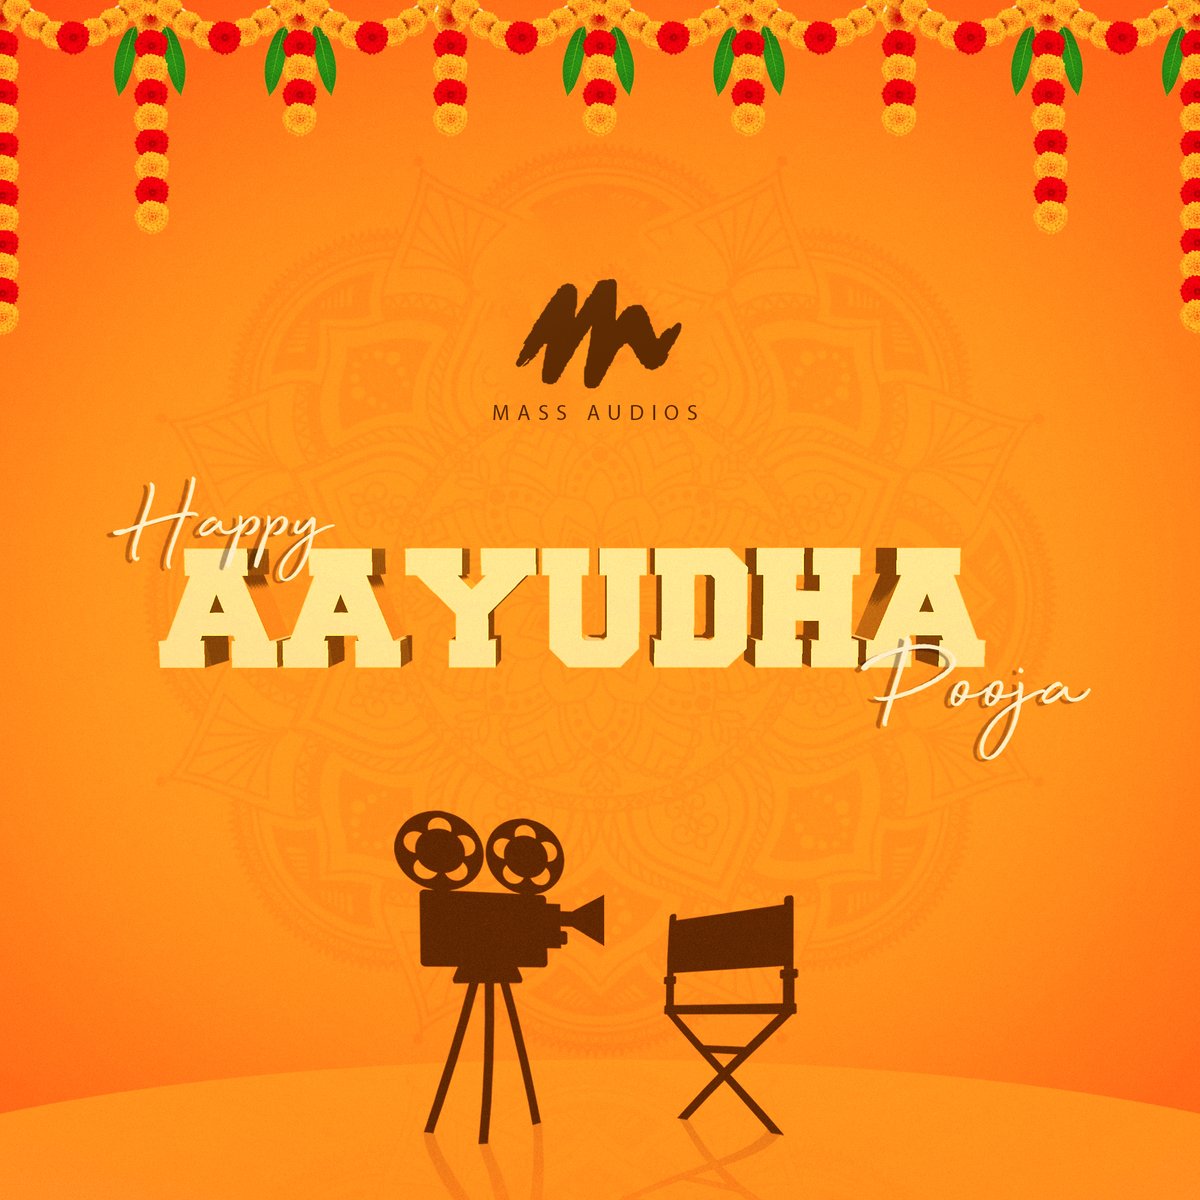 Wishing All A Very Happy #aayudhapooja
#happyaayudhapojai #happyaayudhapooja #massaudios